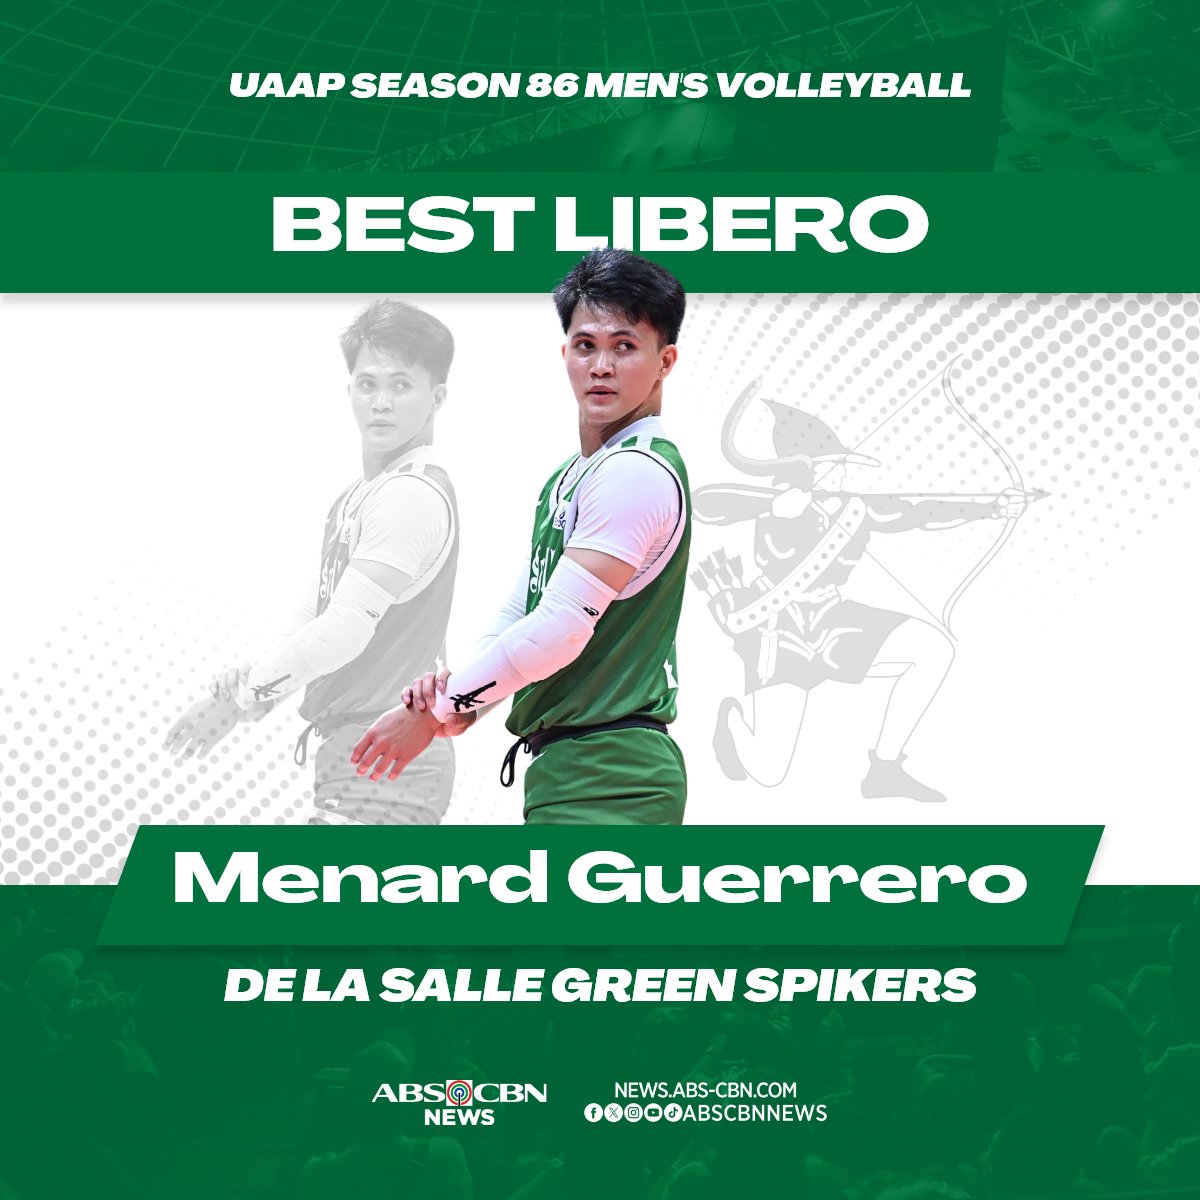 Congratulations to the De La Salle Green Spikers’ Menard Guerrero for being named as the #UAAPSeason86 men’s volleyball tournament Best Libero! | via @romwelanzures